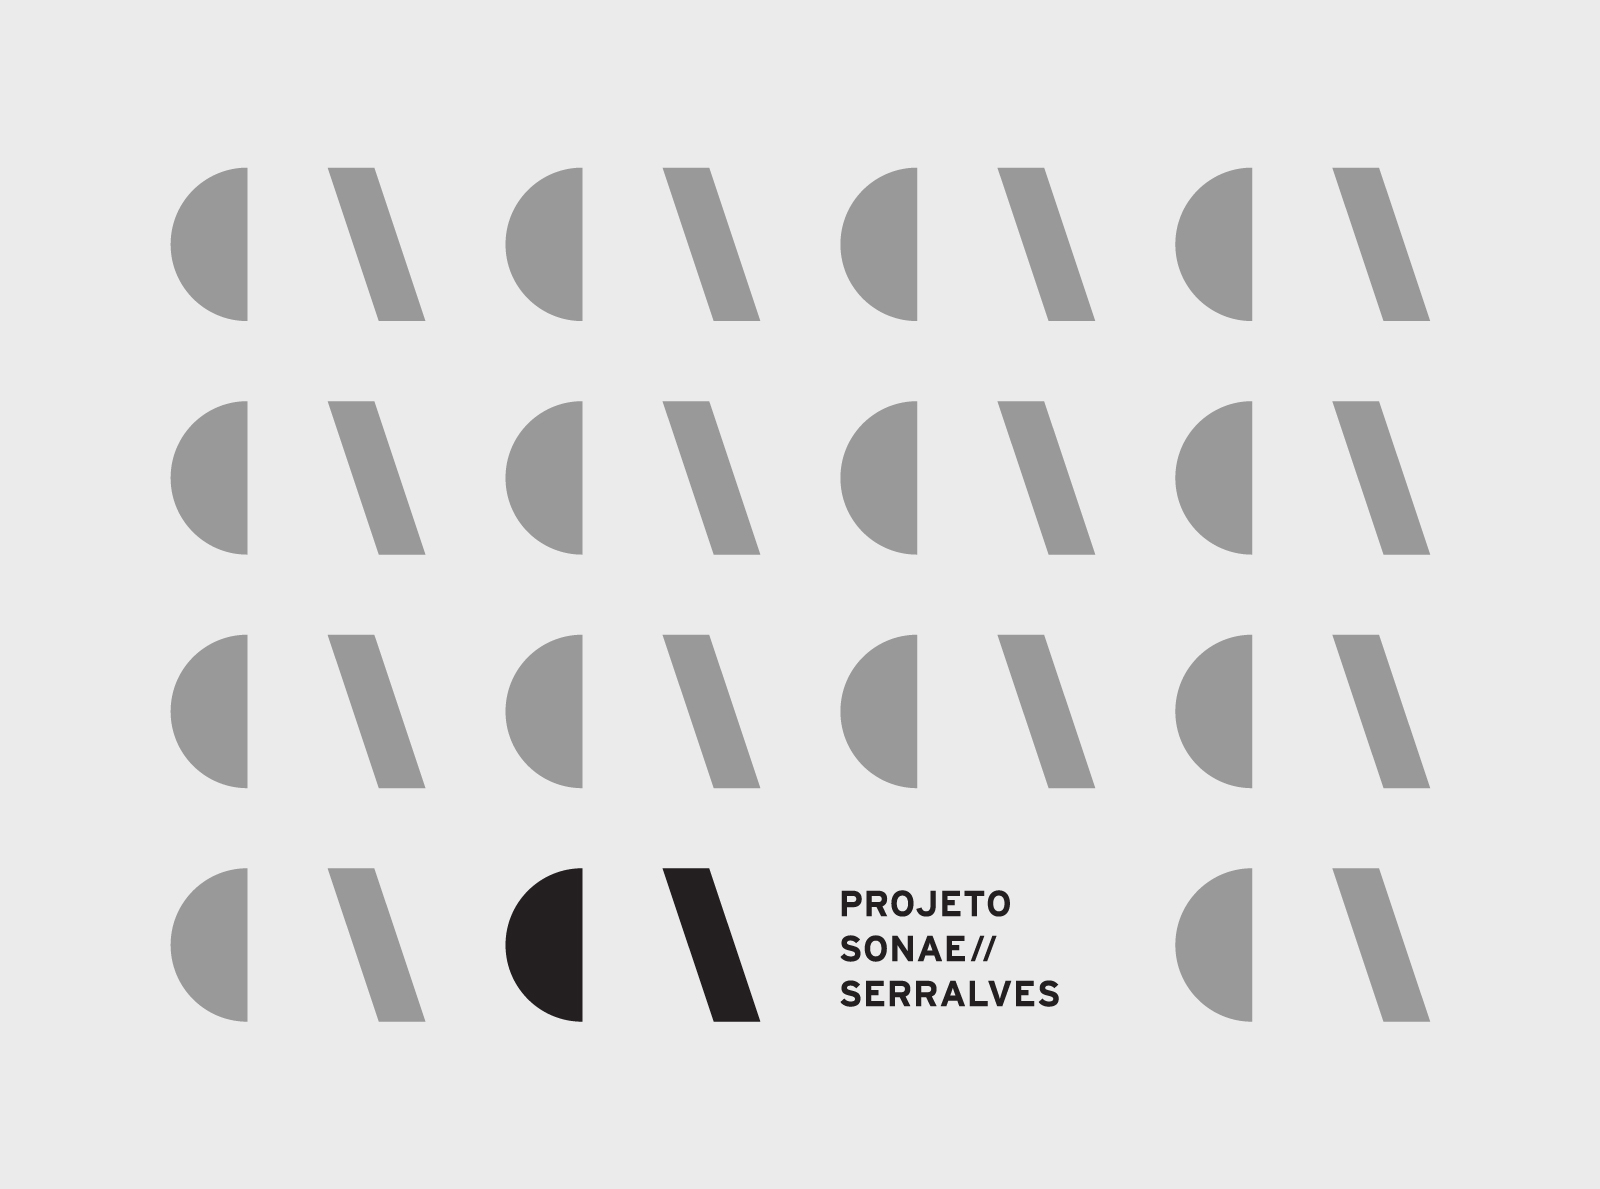 Projecto Sonae//Serralves ⟐ Logo and pattern